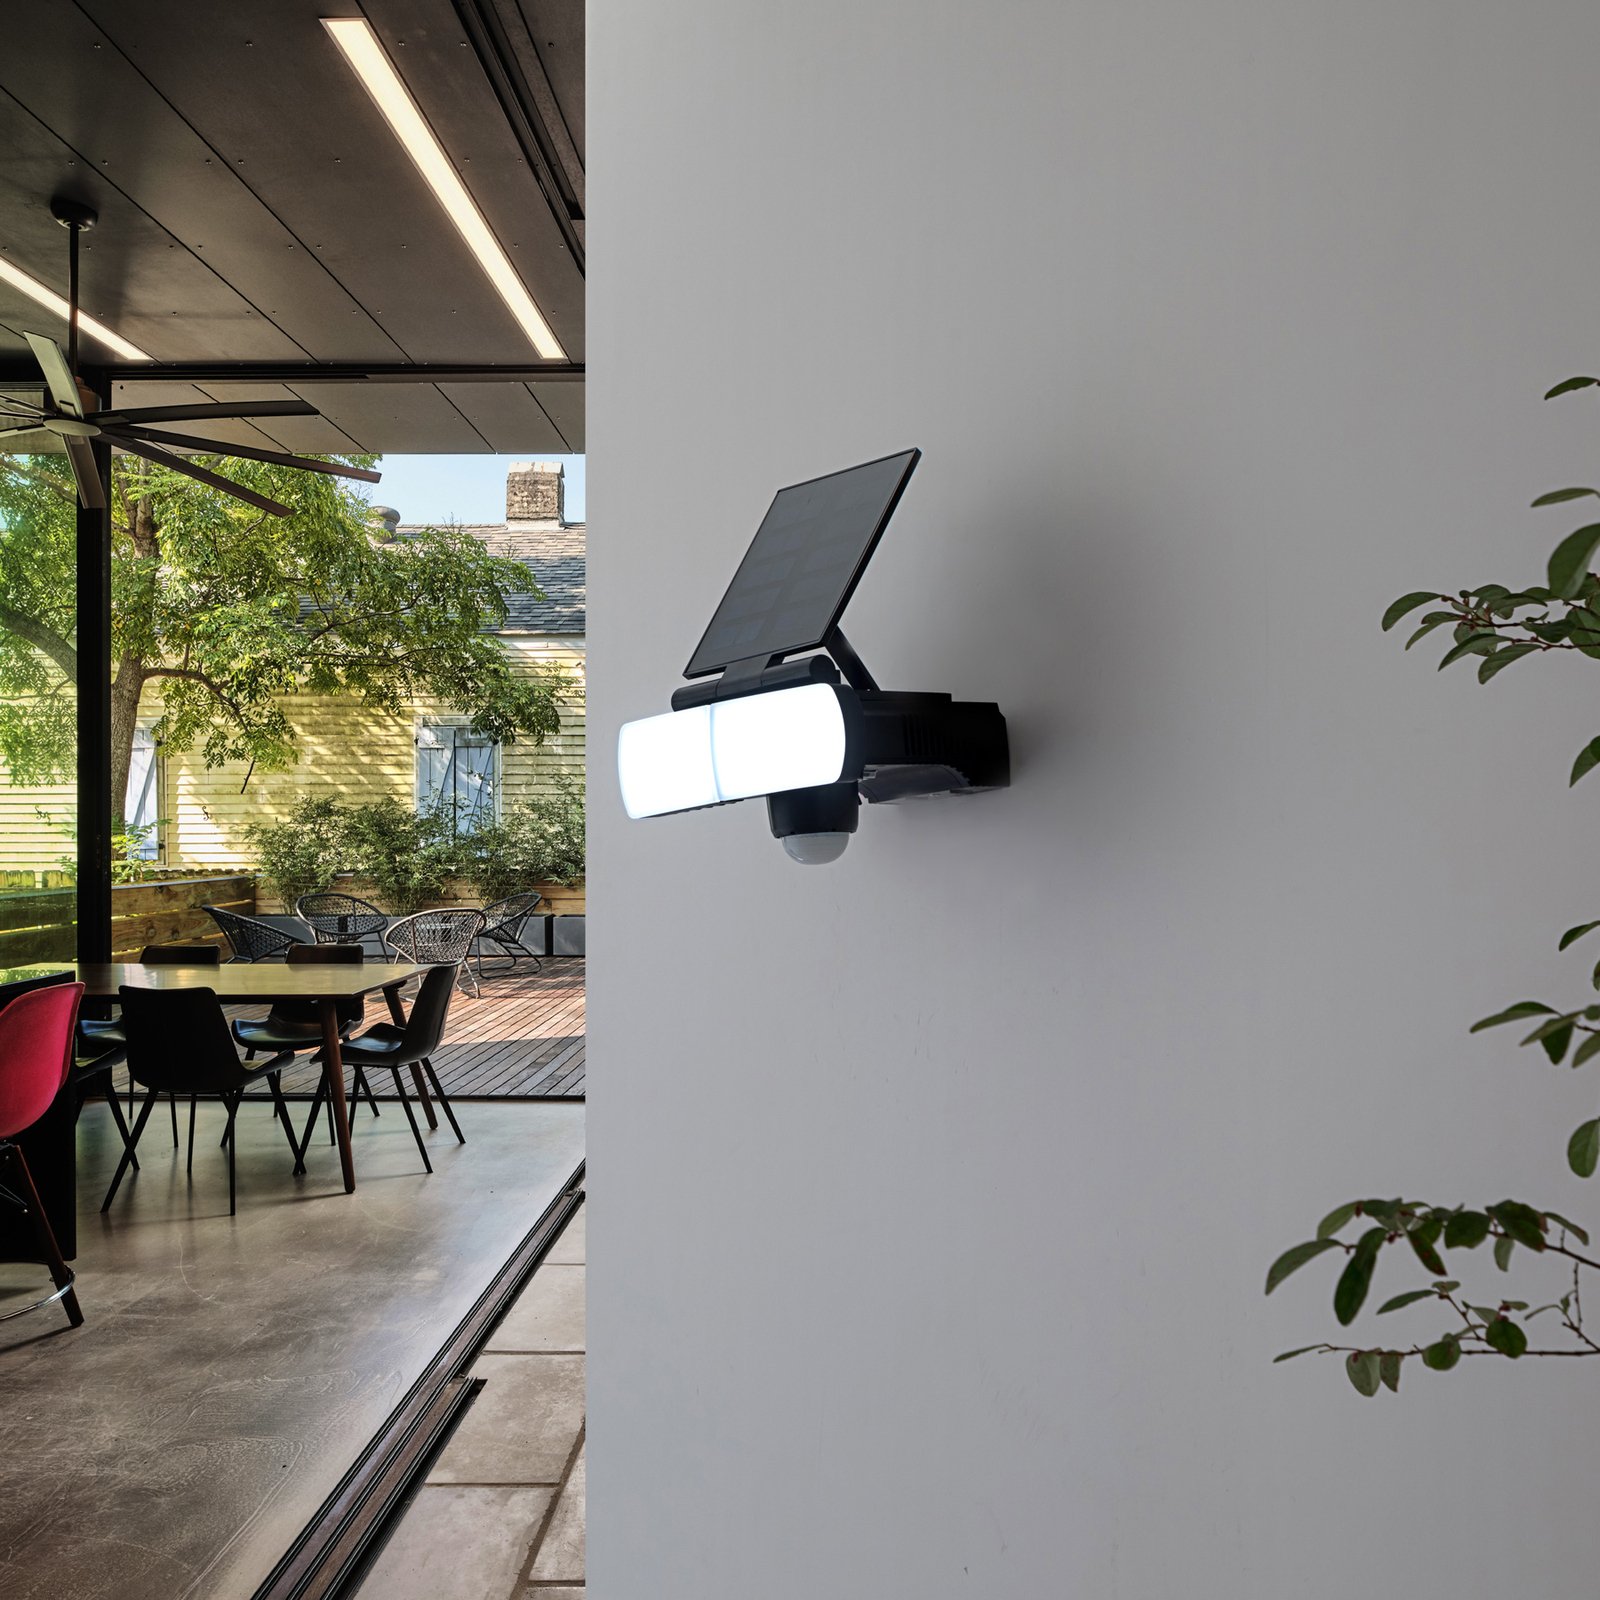 Prios Wrenley LED solar wall spotlight, sensor